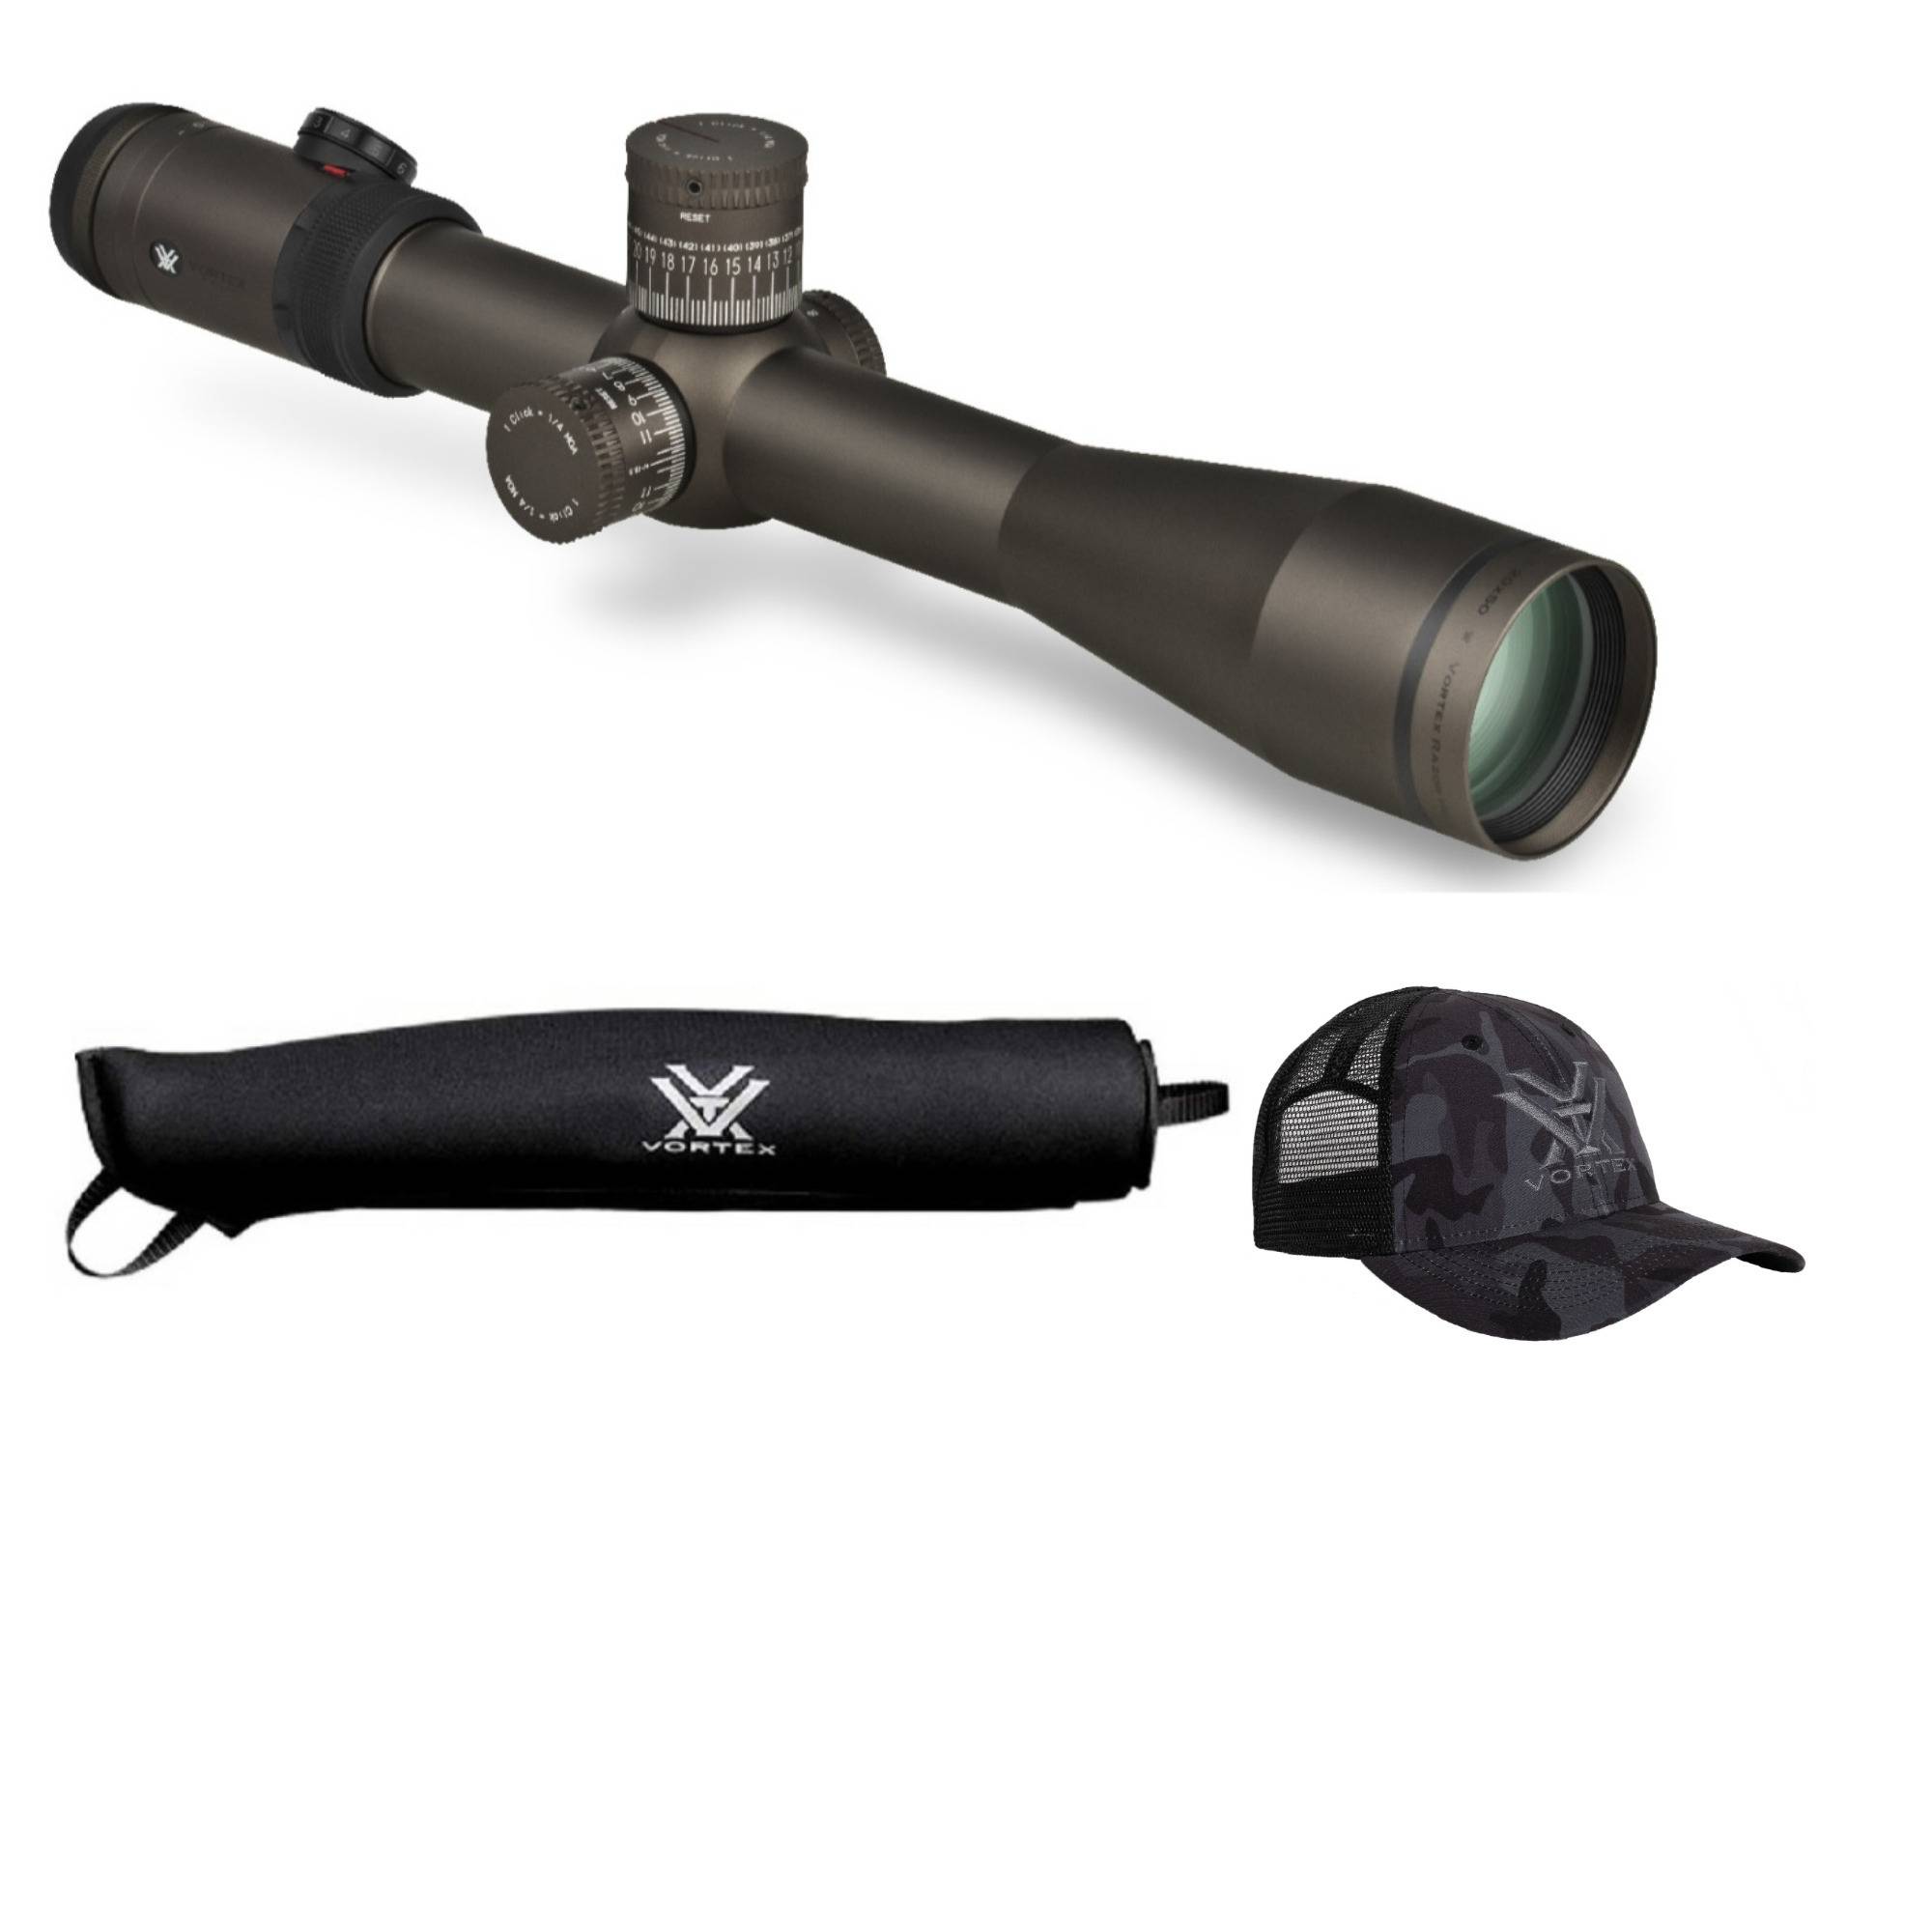 Vortex Razor HD 5-20x50 Riflescope (EBR-2B MOA Reticle) with Cap and Cover